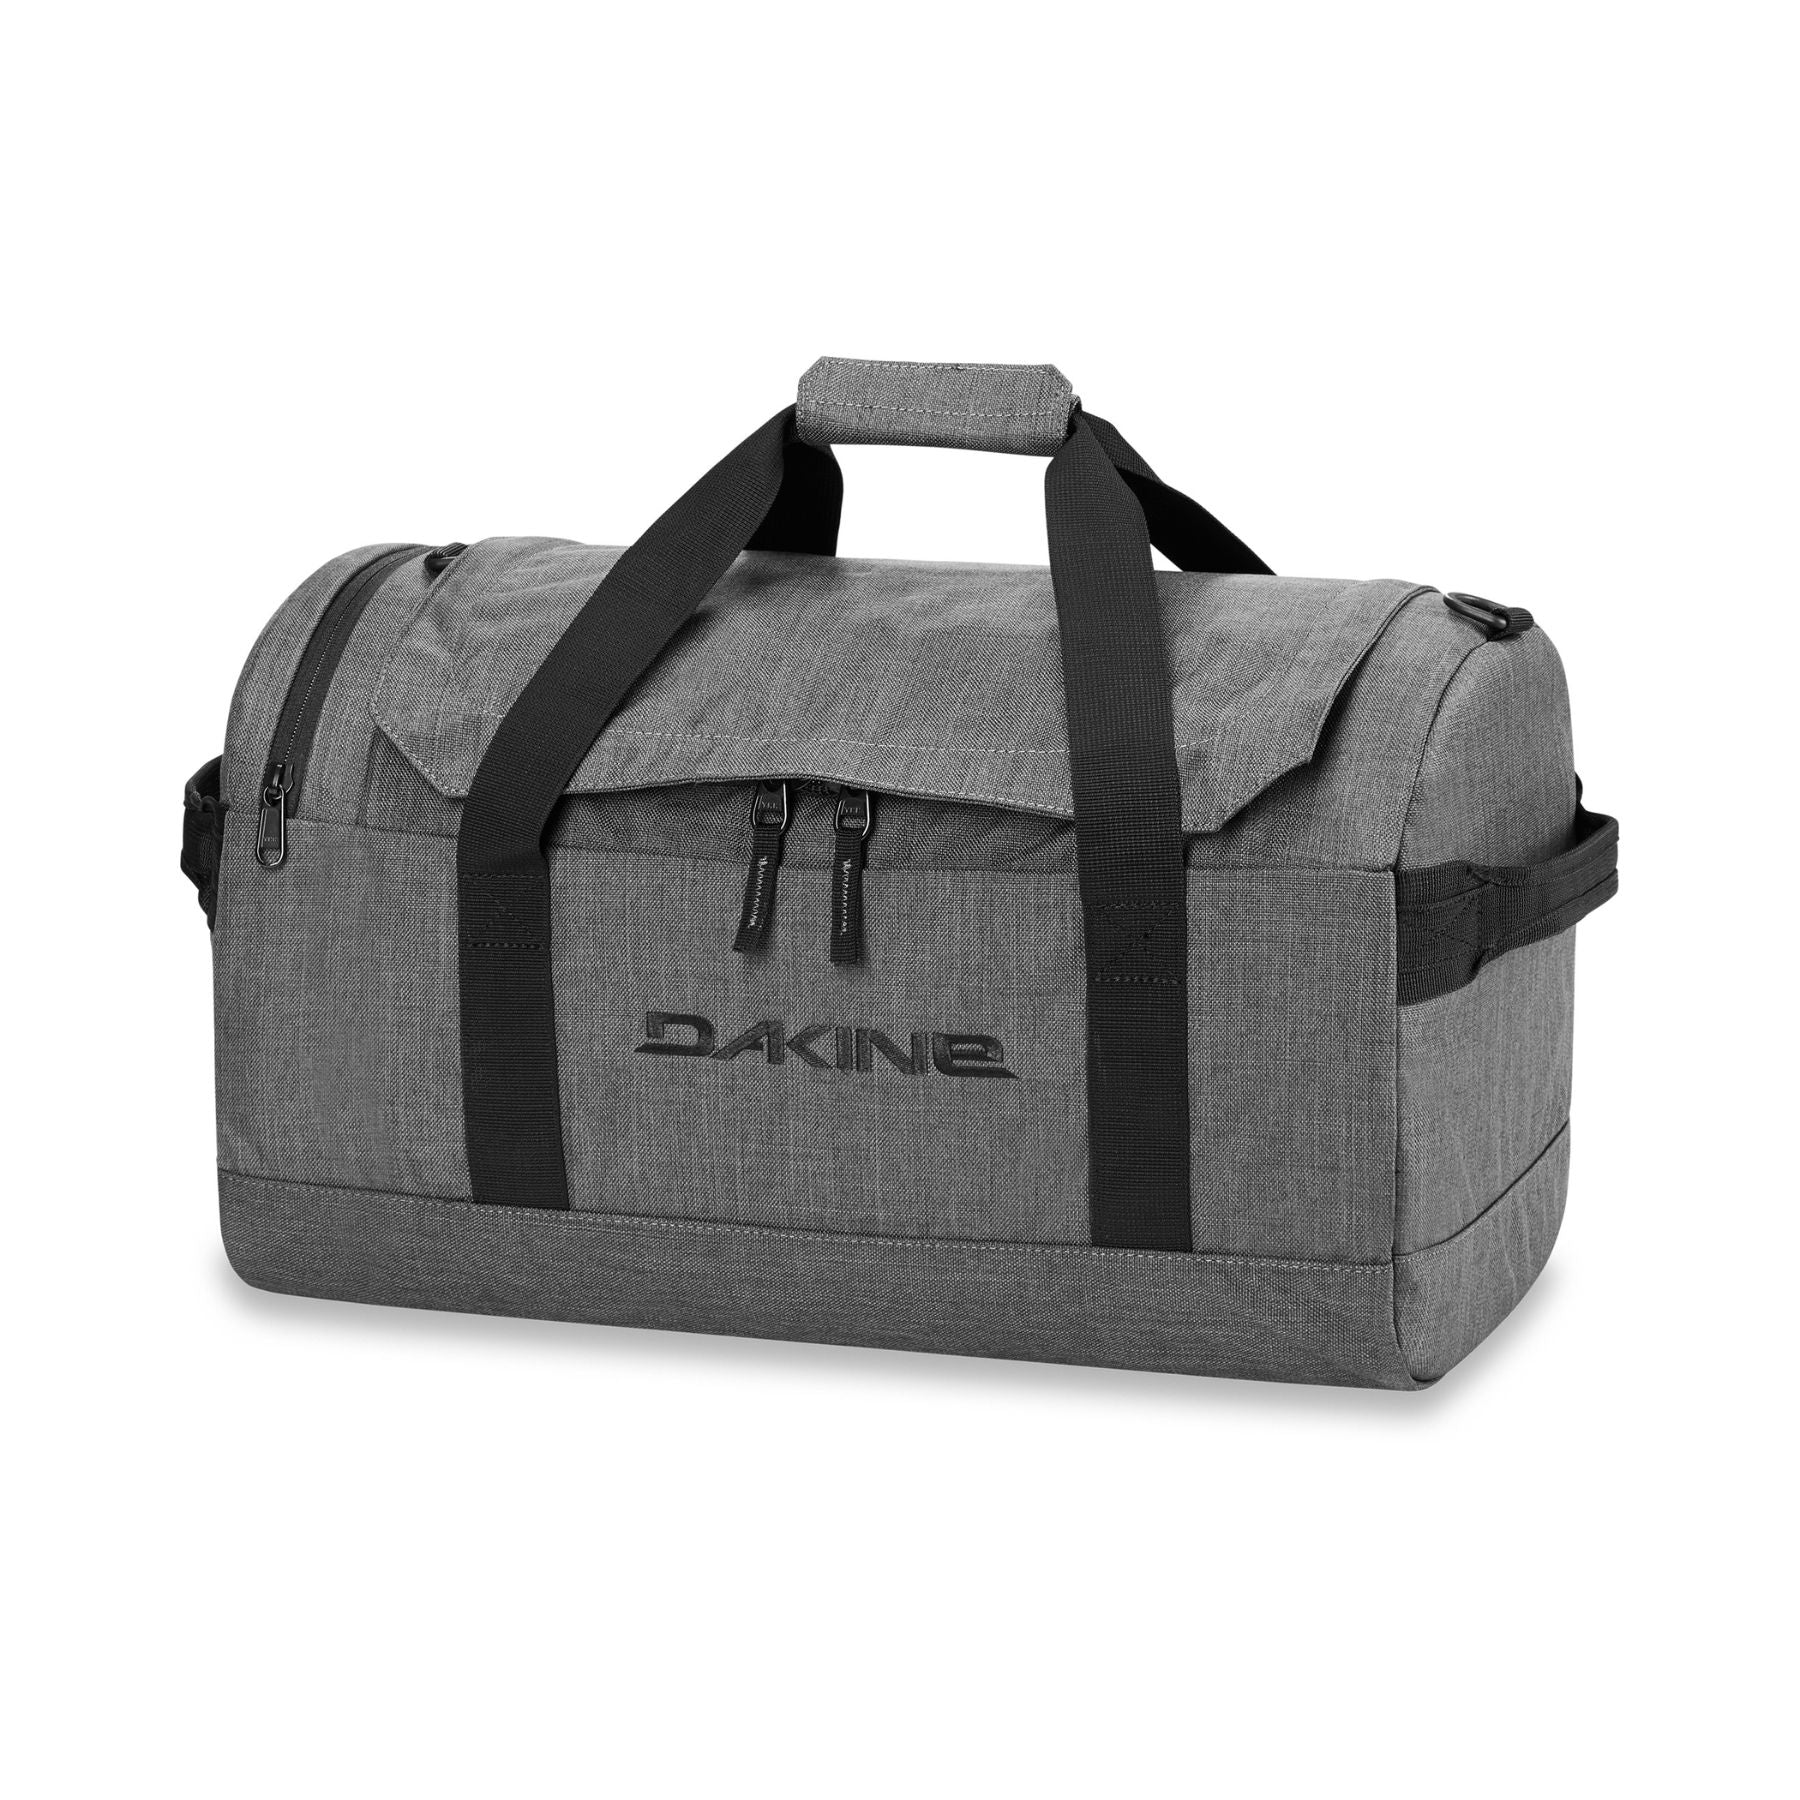 Dakine EQ Duffle 35L Bag in Carbon